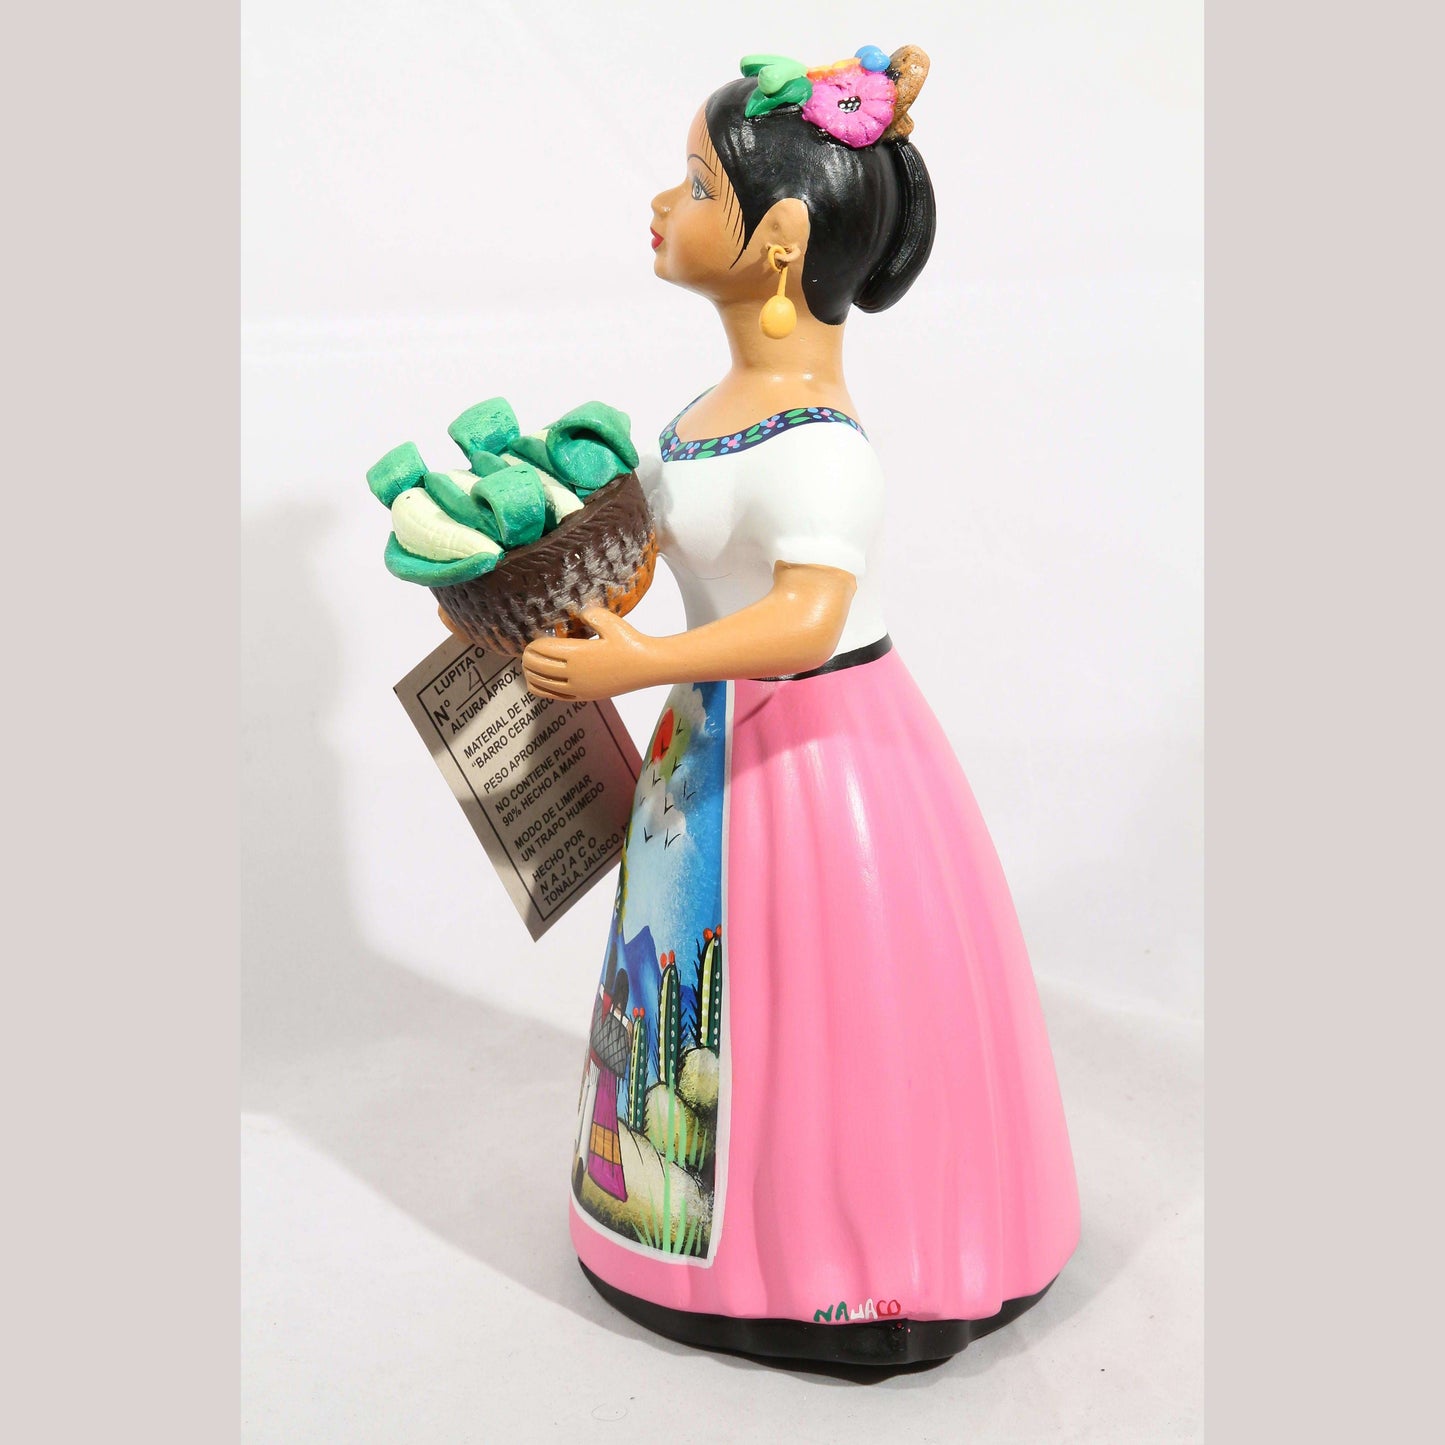 Lupita NAJACO Doll/Figurine Basket Corn Mexican Folk Art Collectible Decor Pink